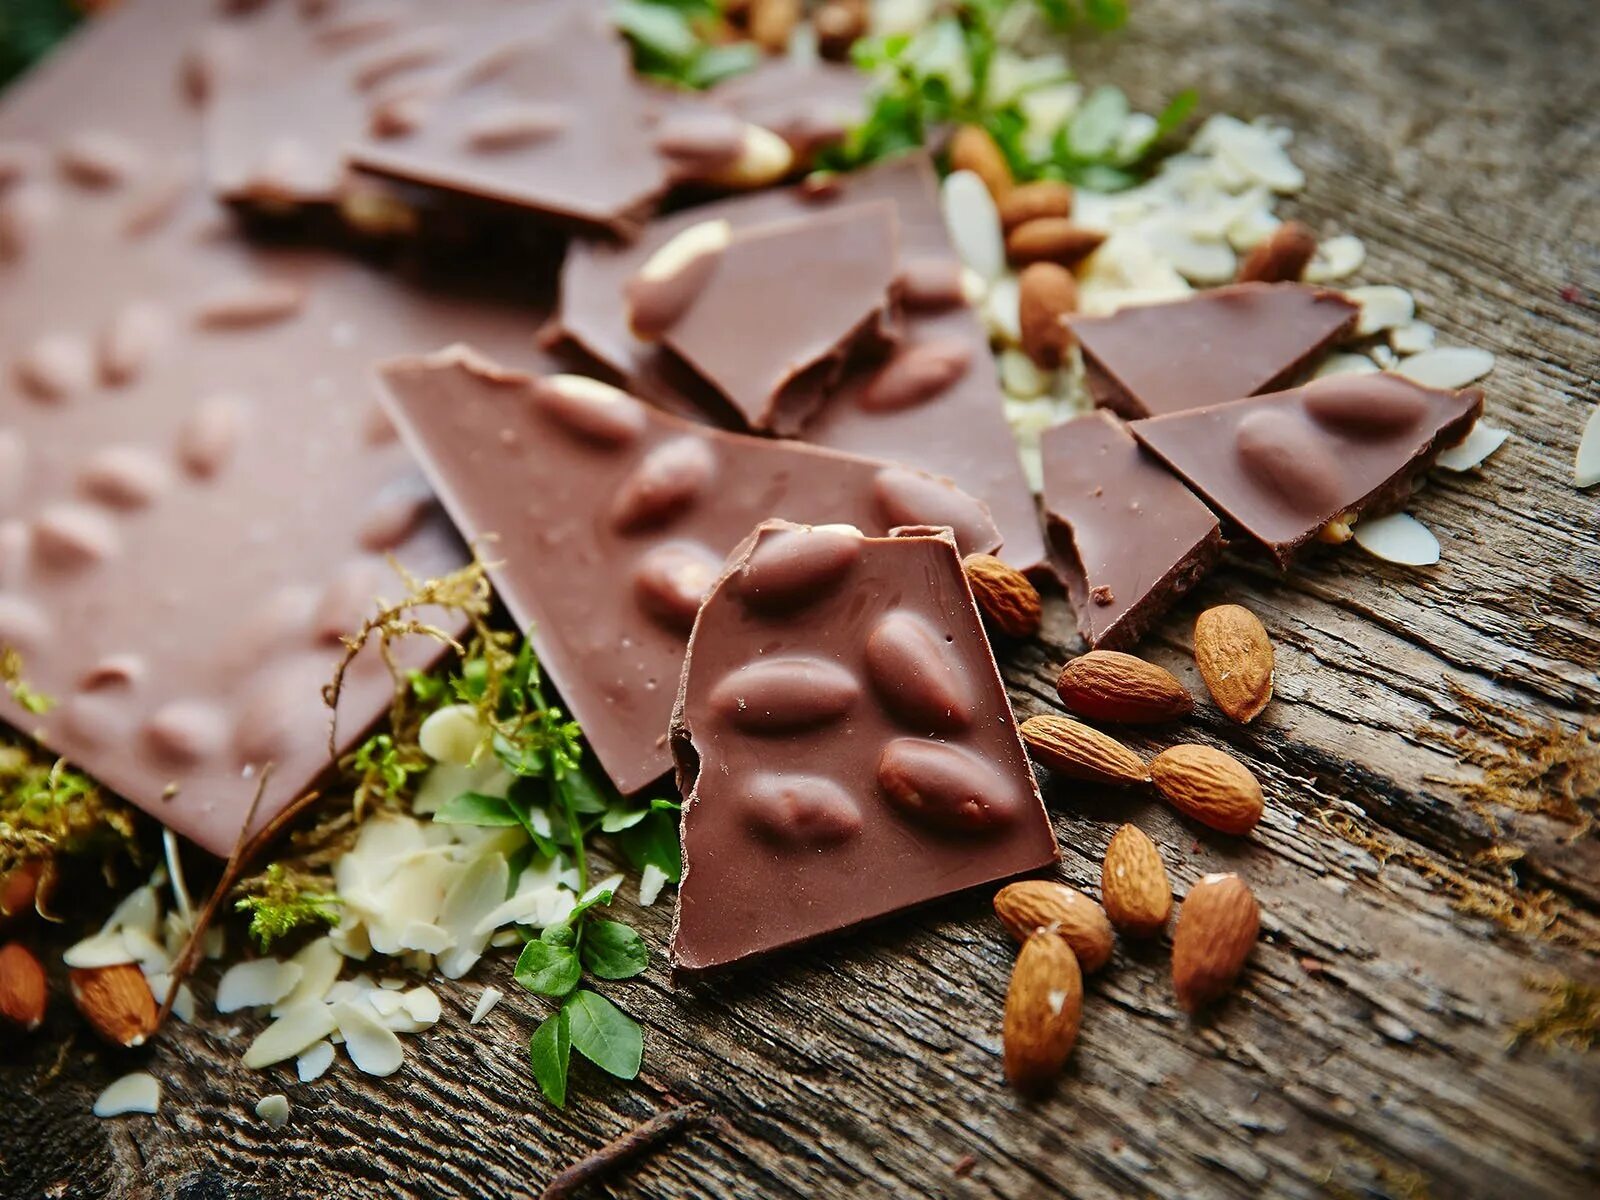 Chocolate pictures. Шоколад. Молочный шоколад. Плитка шоколада с орешками. Орешки в шоколаде.